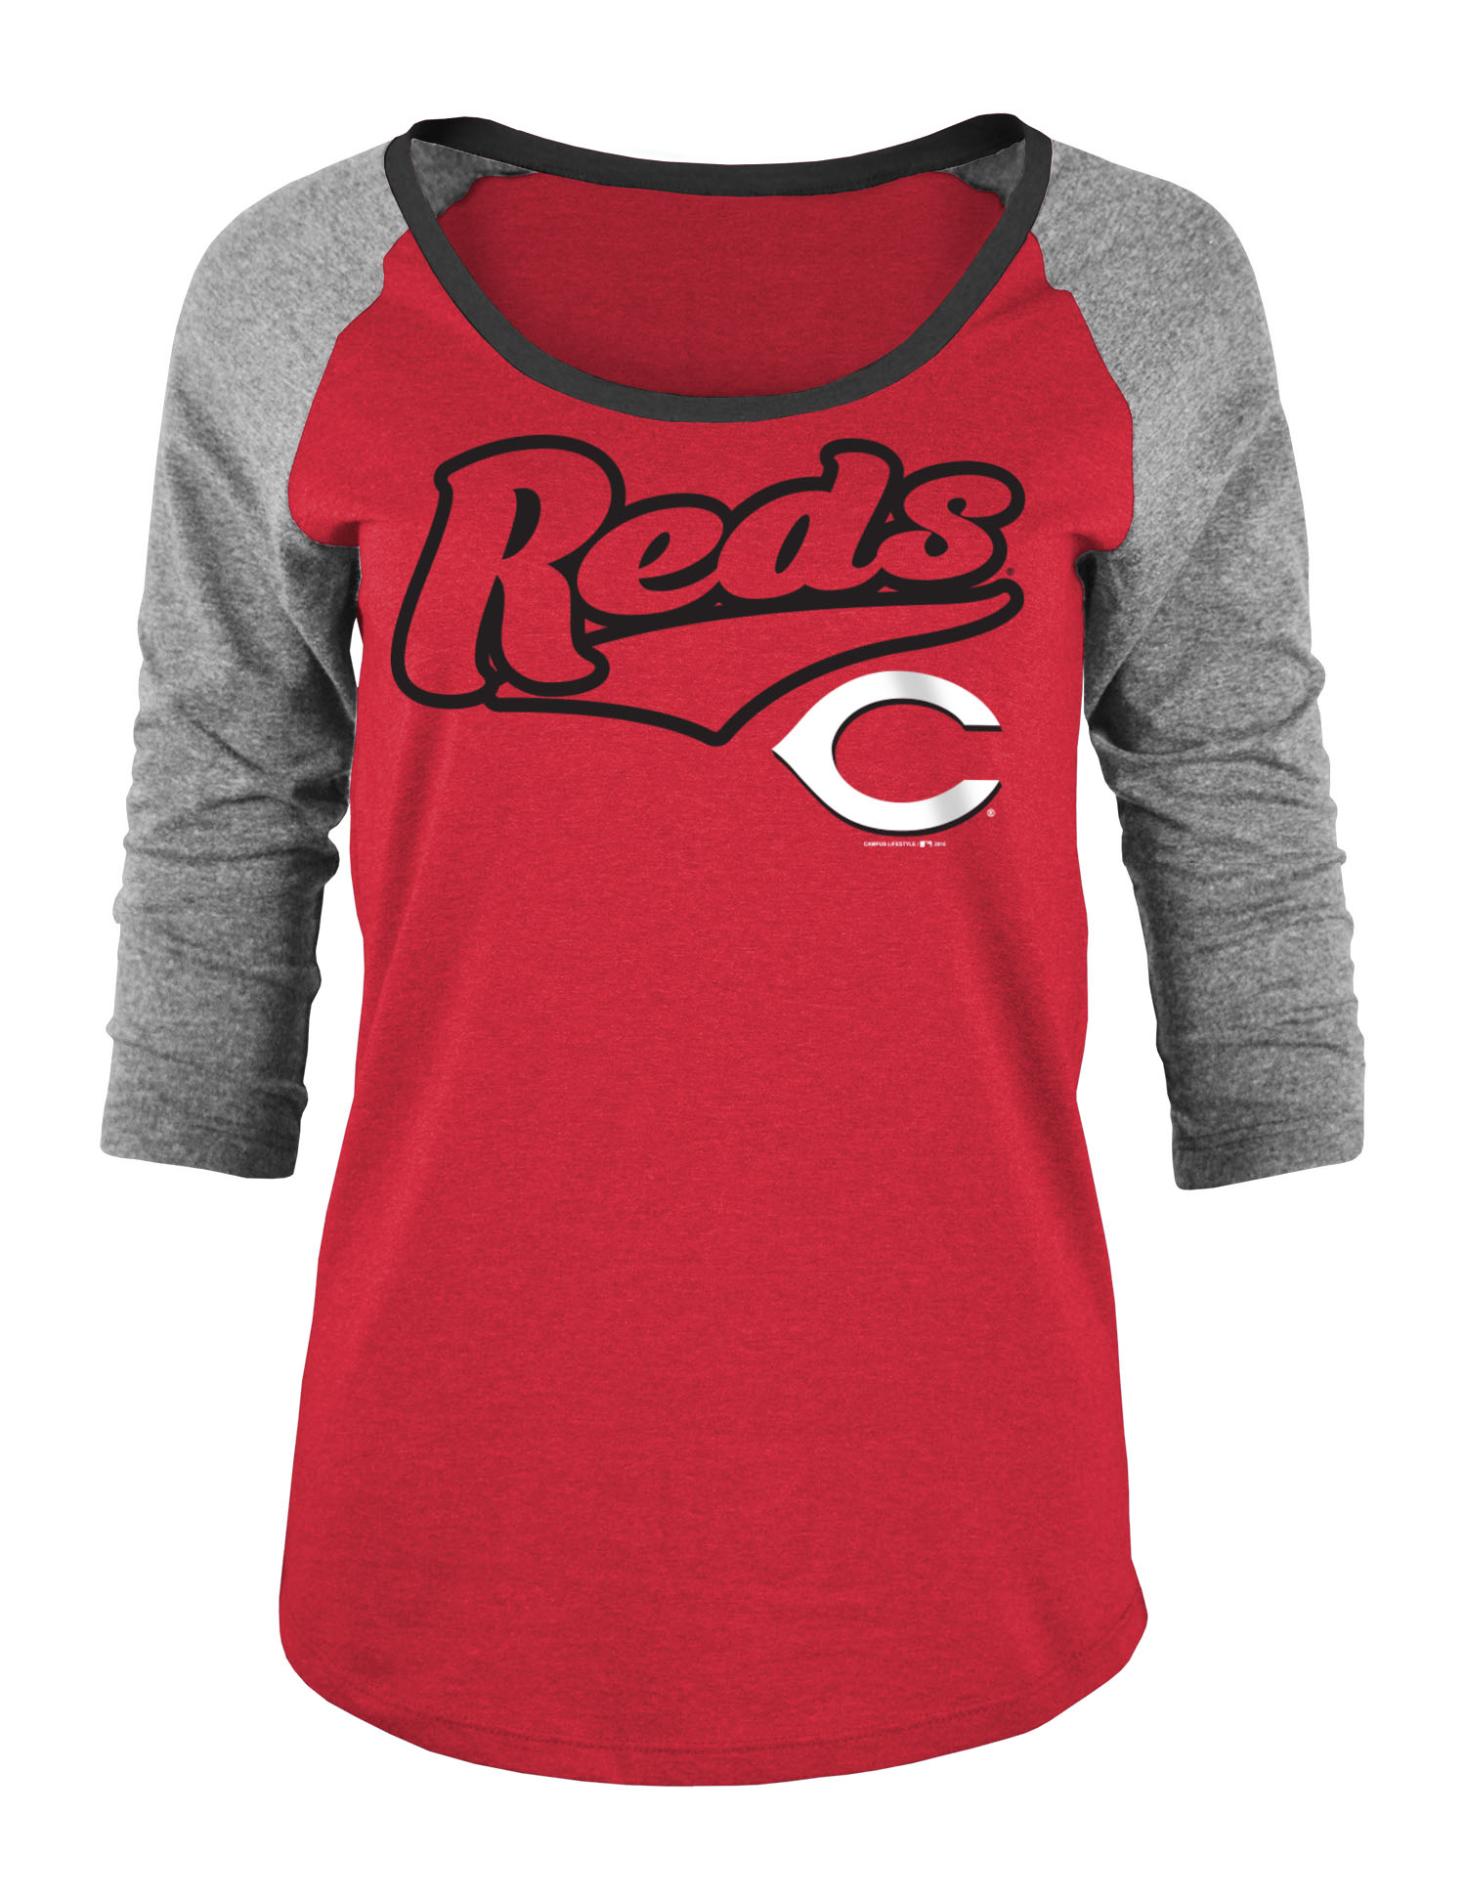 MLB Women's Raglan T-Shirt - Cincinnati Reds